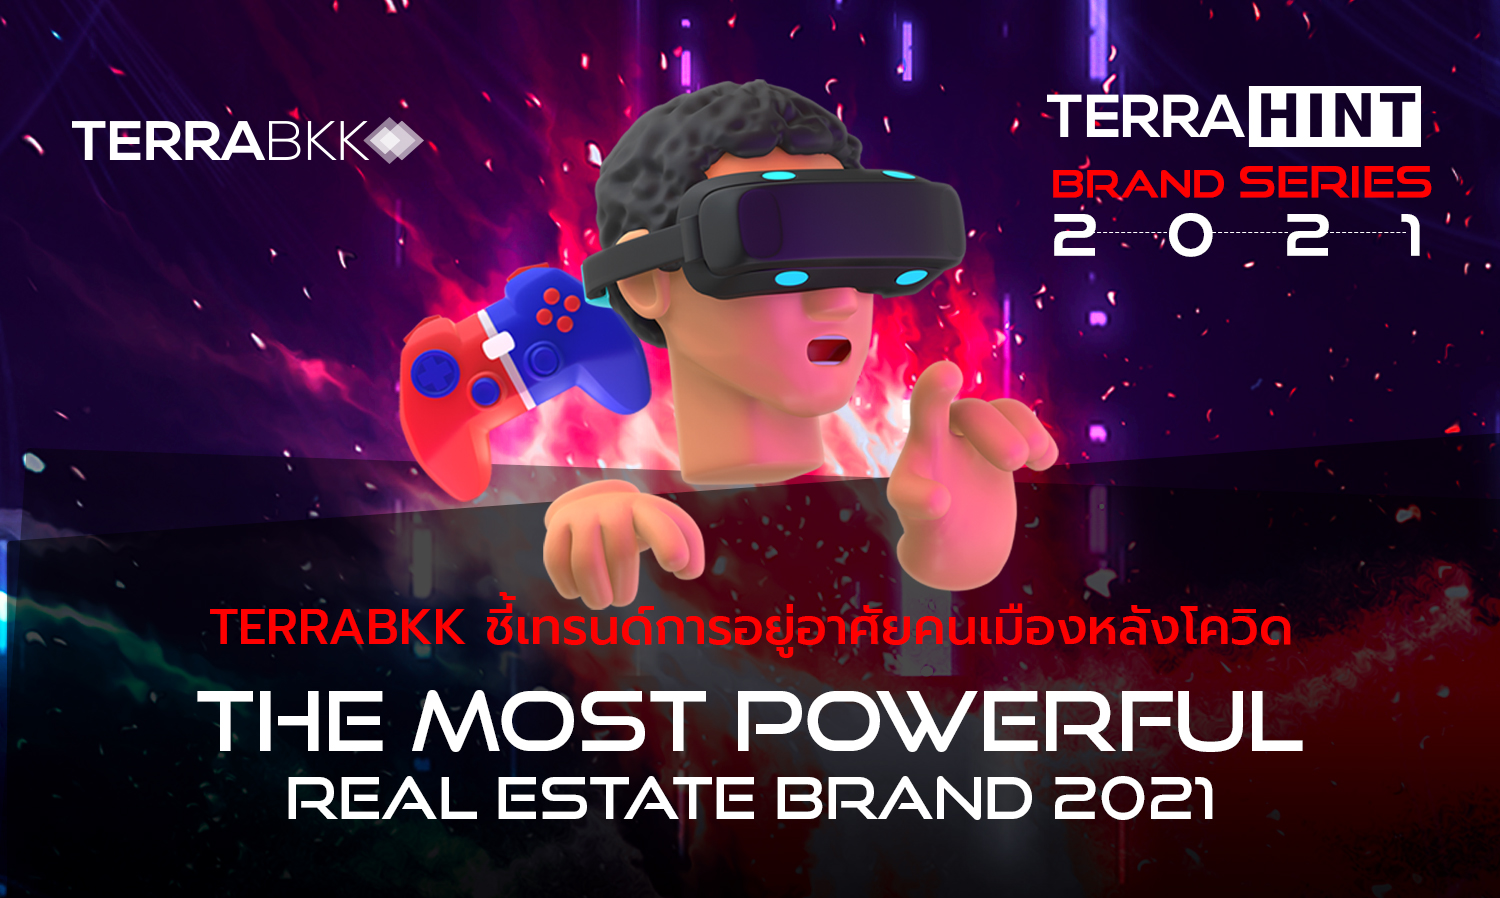 TerraBKK ชี้เทรนด์การอยู่อาศัยคนเมืองหลังโควิด  จากงาน The most powerful real estate brand 2021 